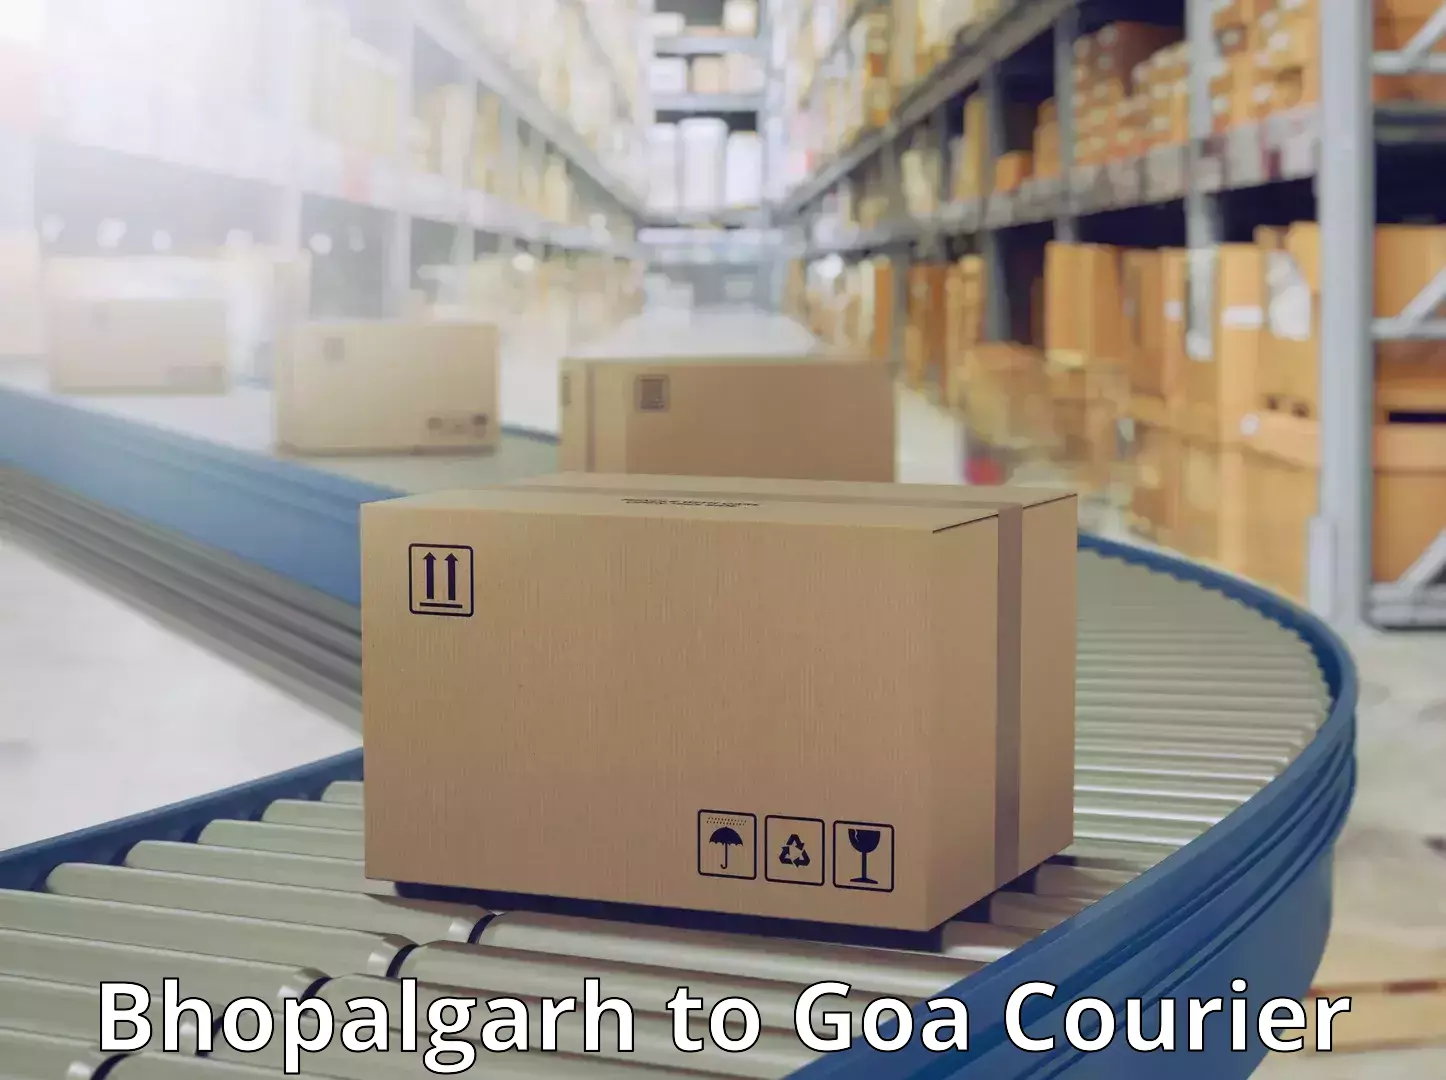 Courier service innovation Bhopalgarh to Panaji